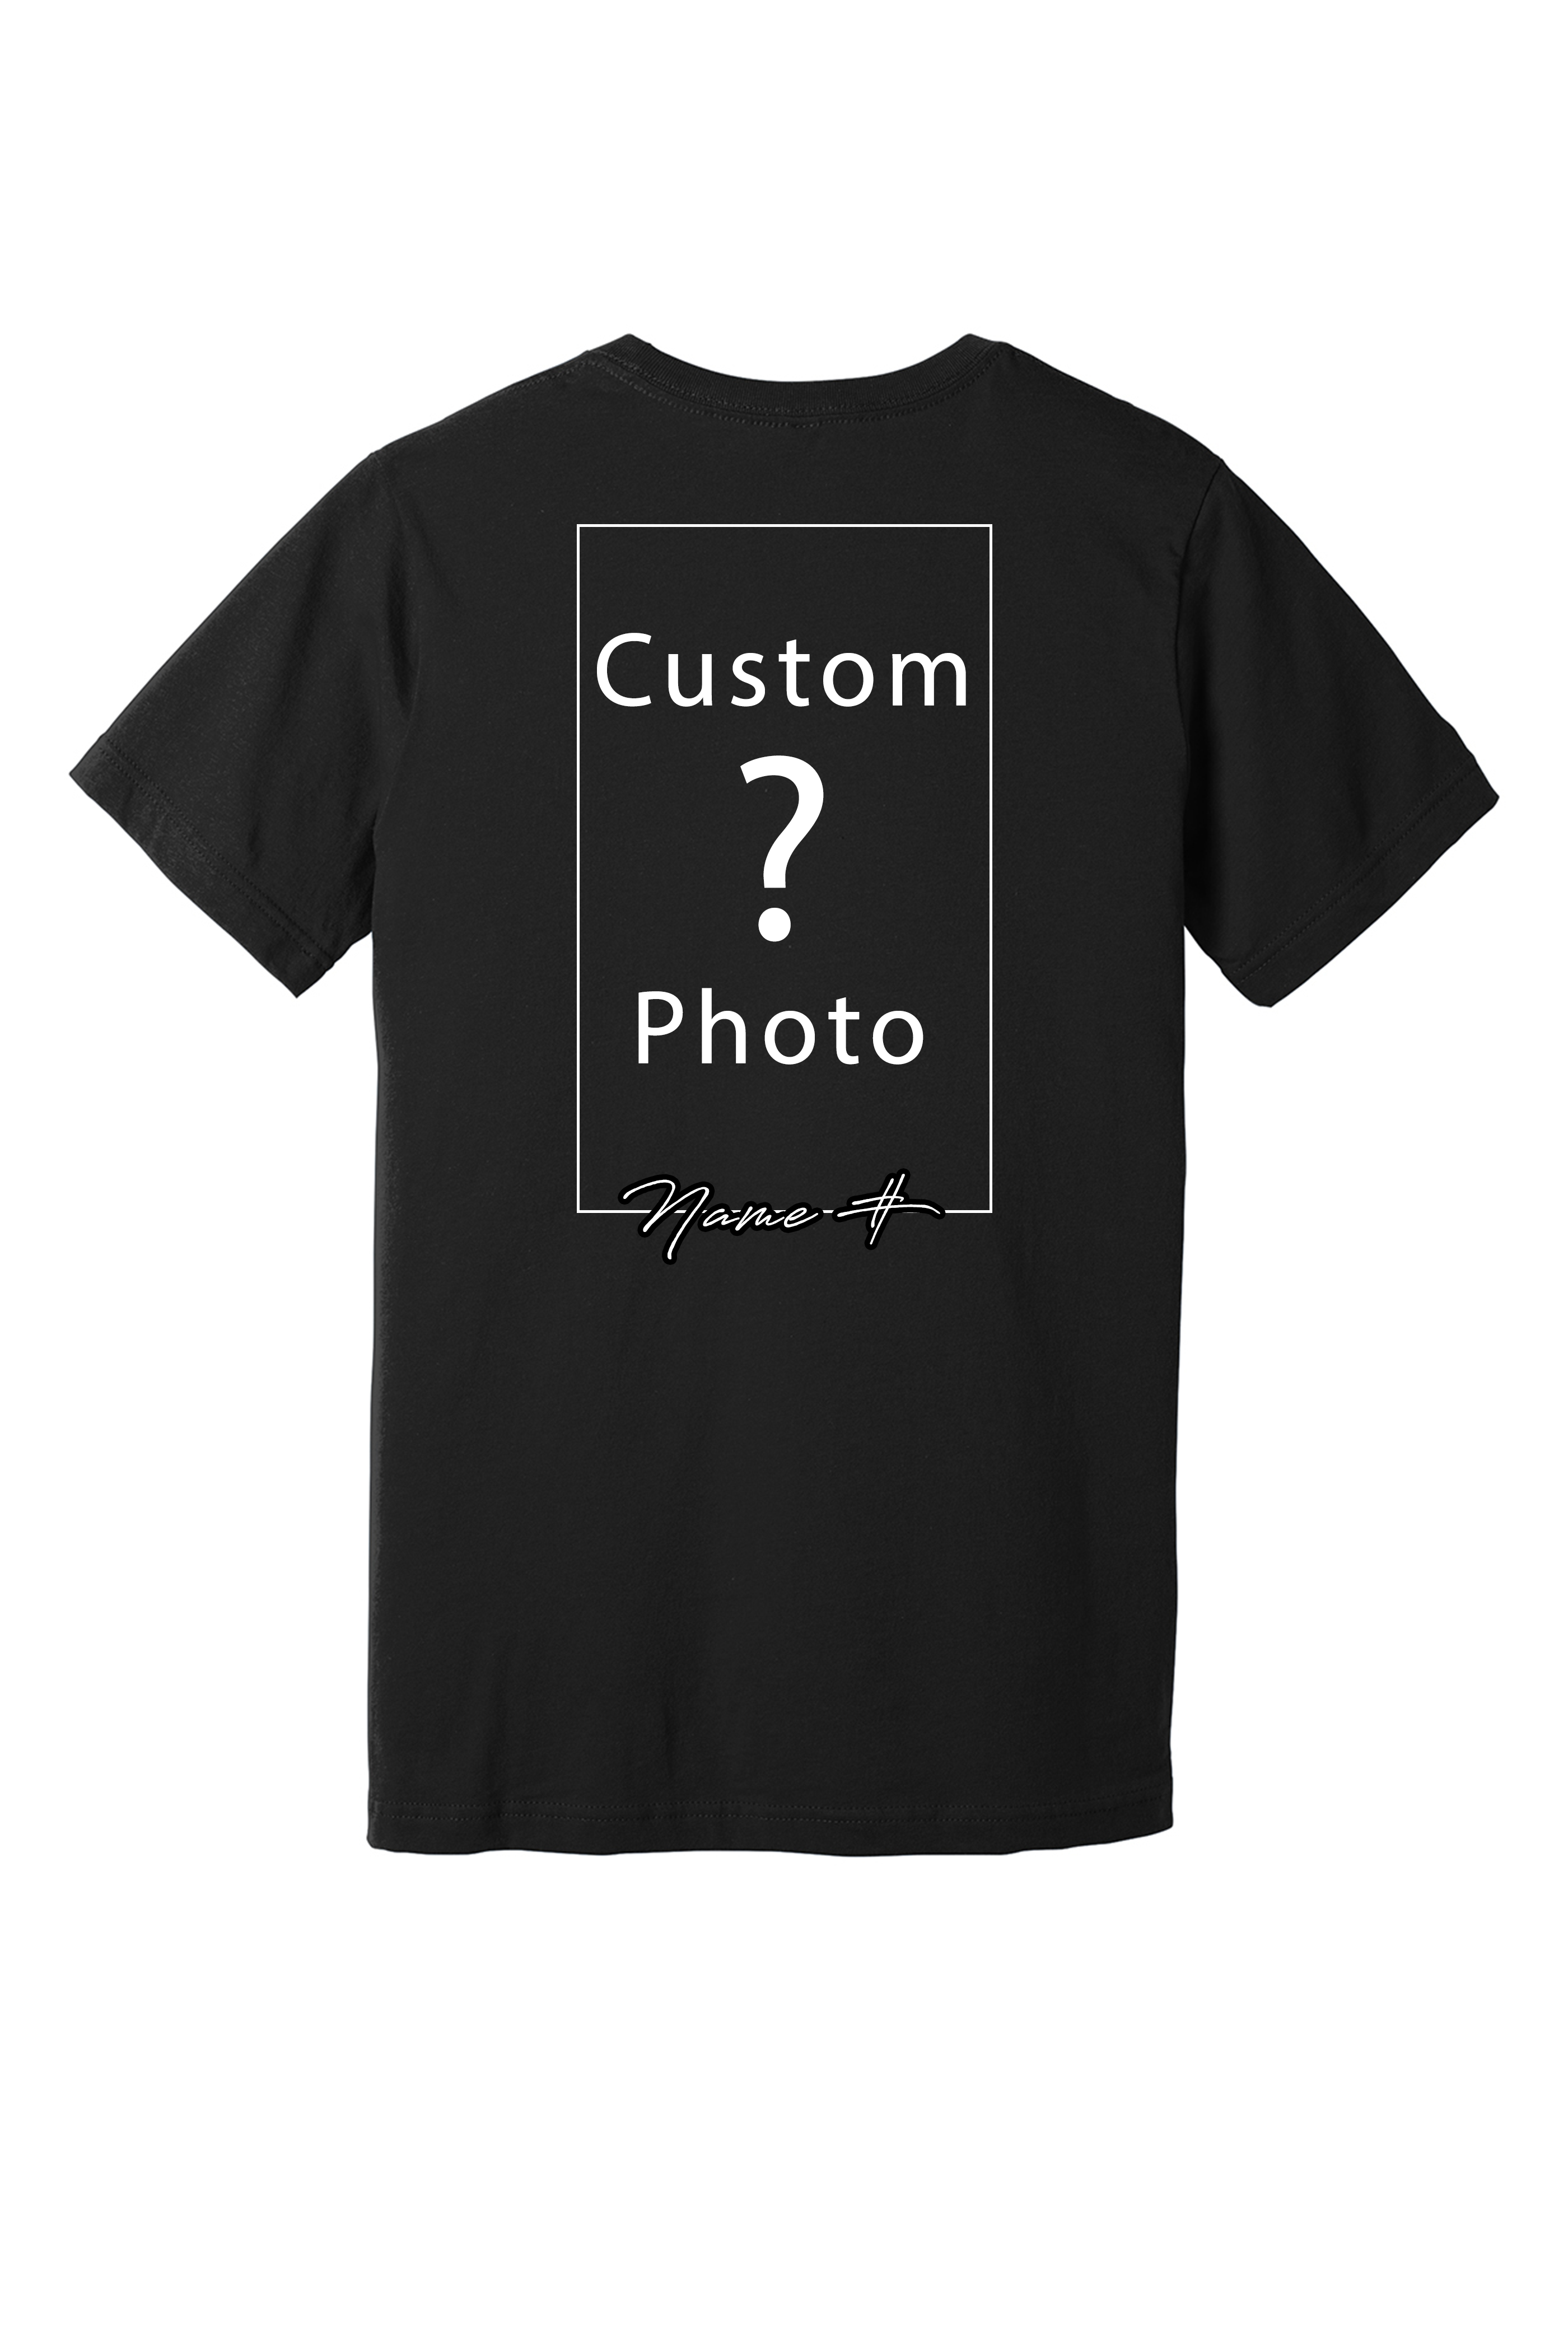 No Soul Studios - Custom Photo T-Shirt